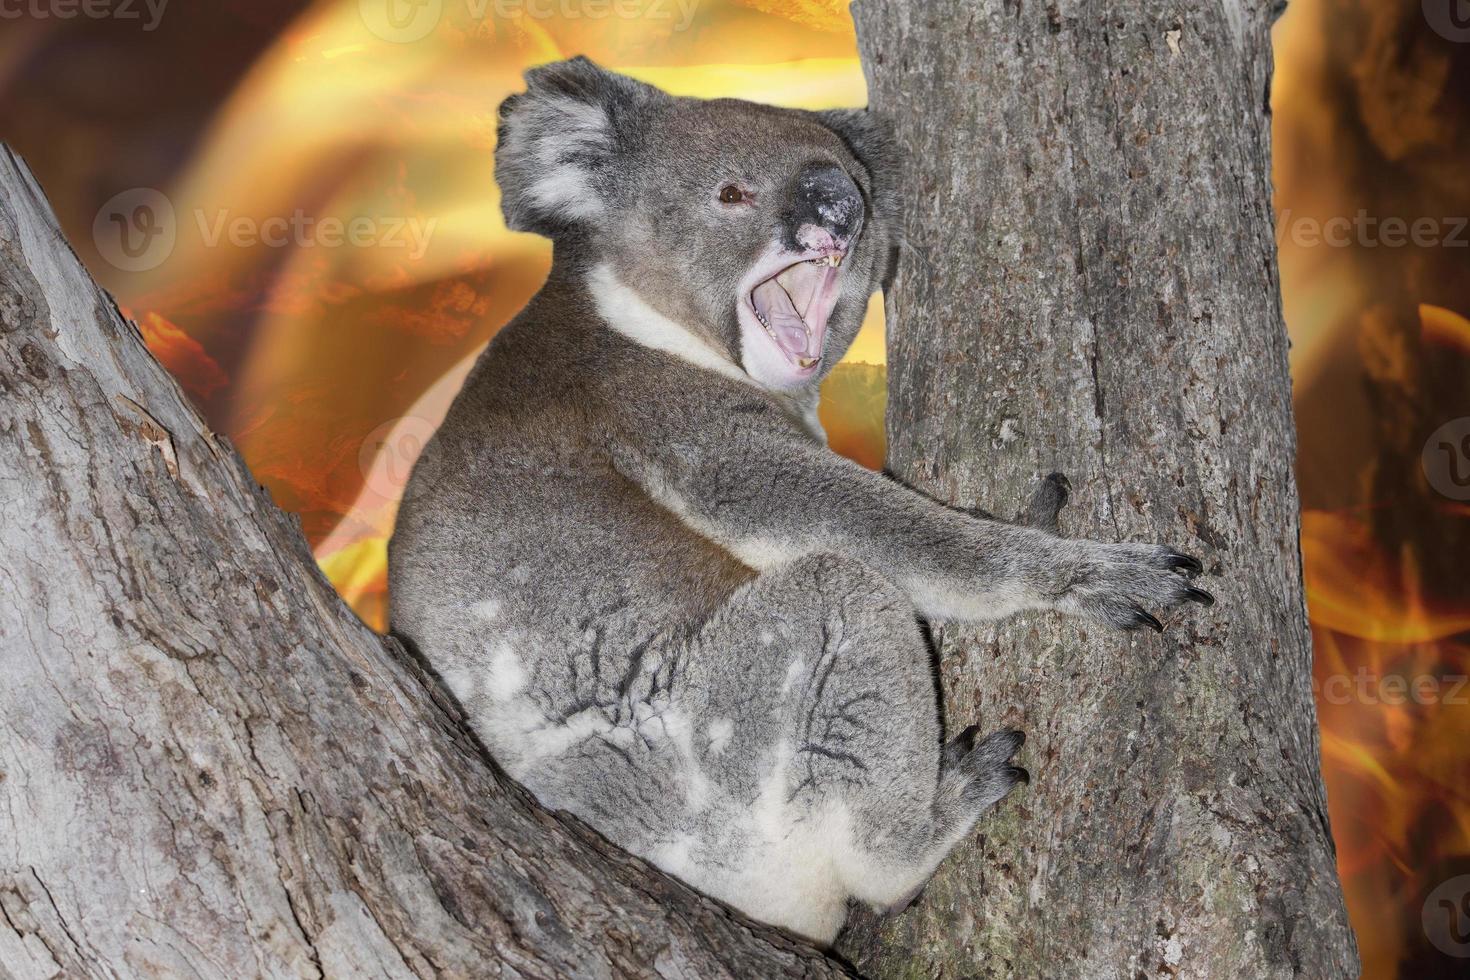 urla pianto koala nel Australia cespuglio fuoco foto